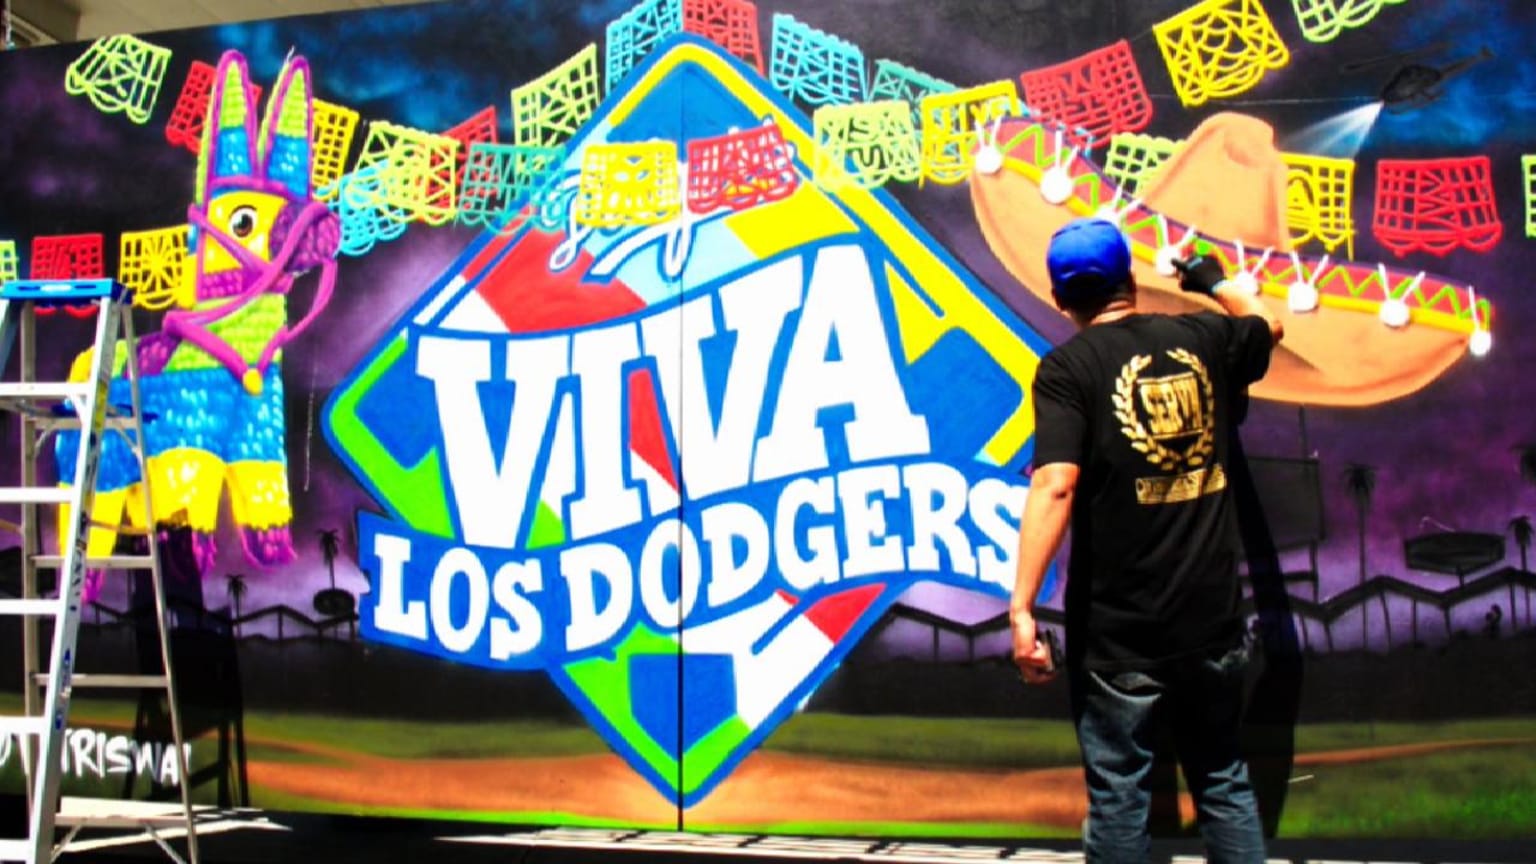 Viva Los Dodgers. 🇲🇽 - Los Angeles Dodgers